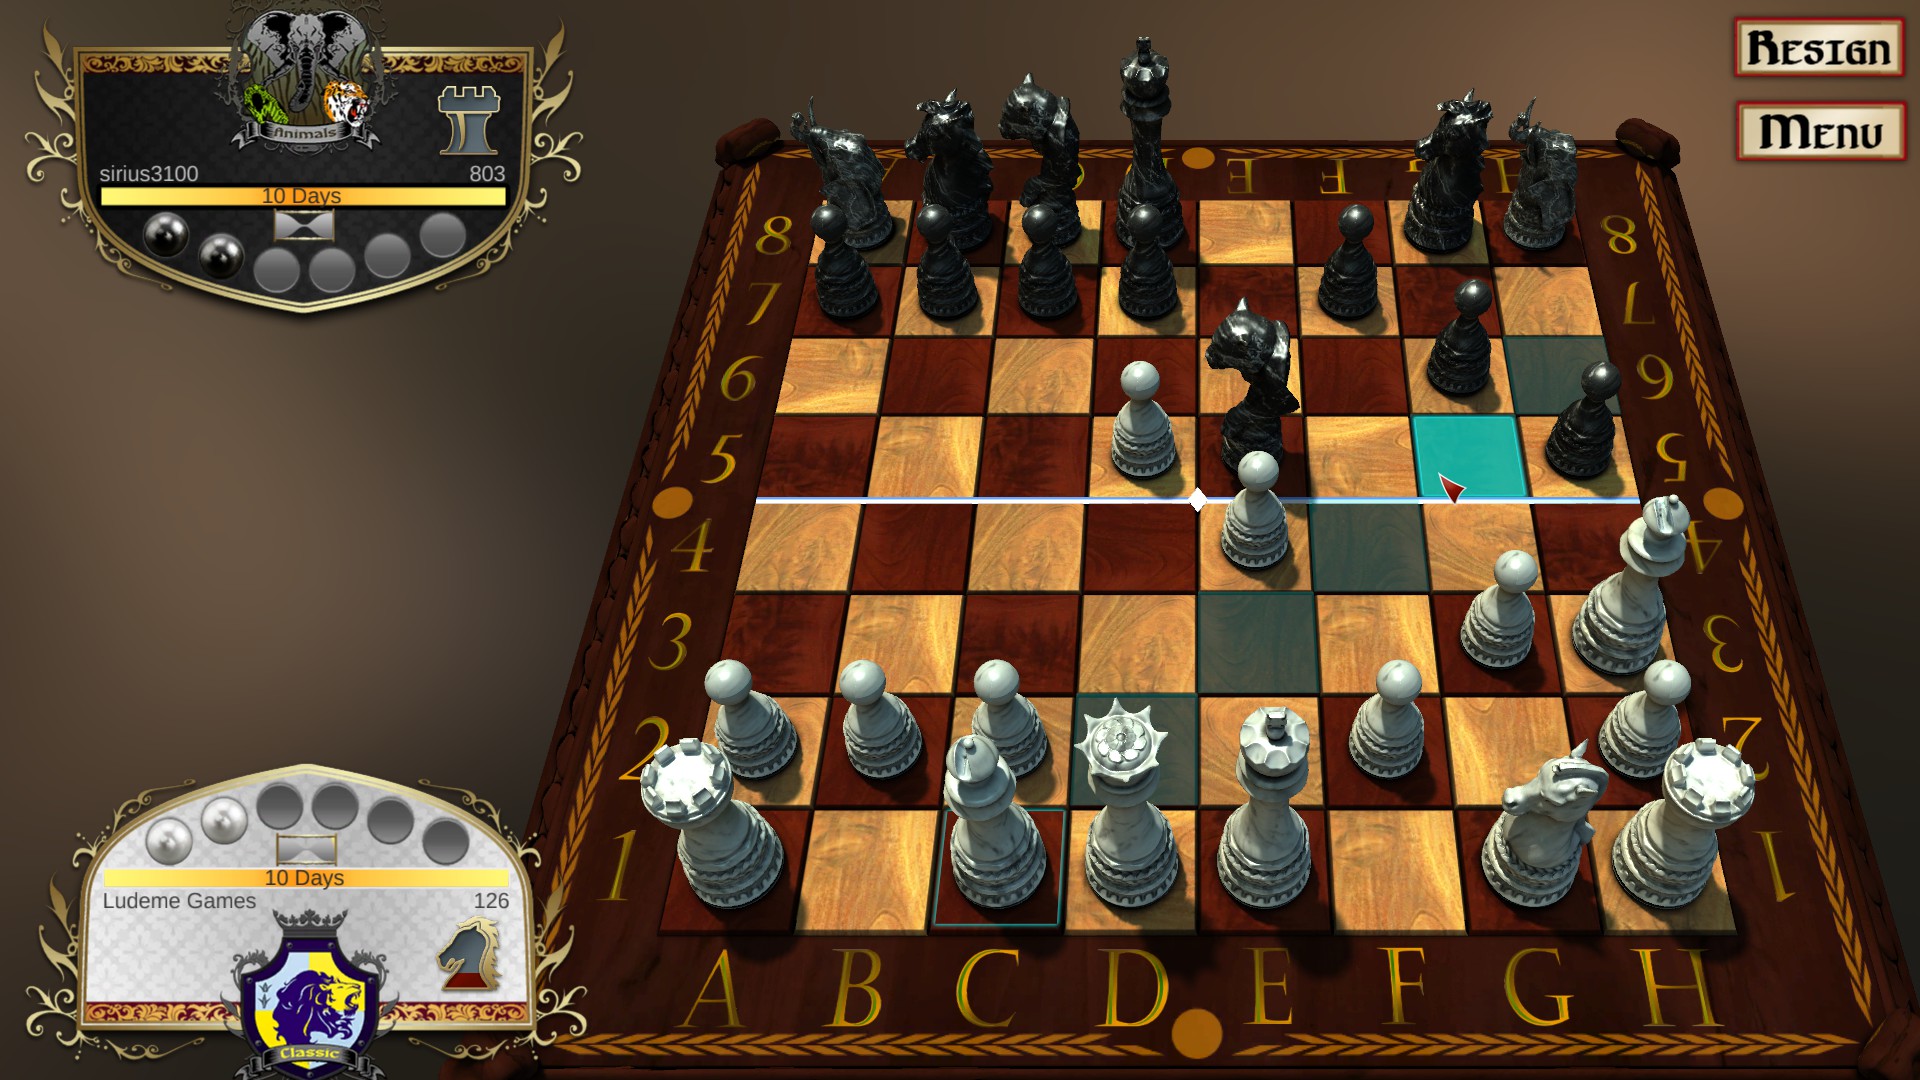 Chess 2: The Sequel - Metacritic